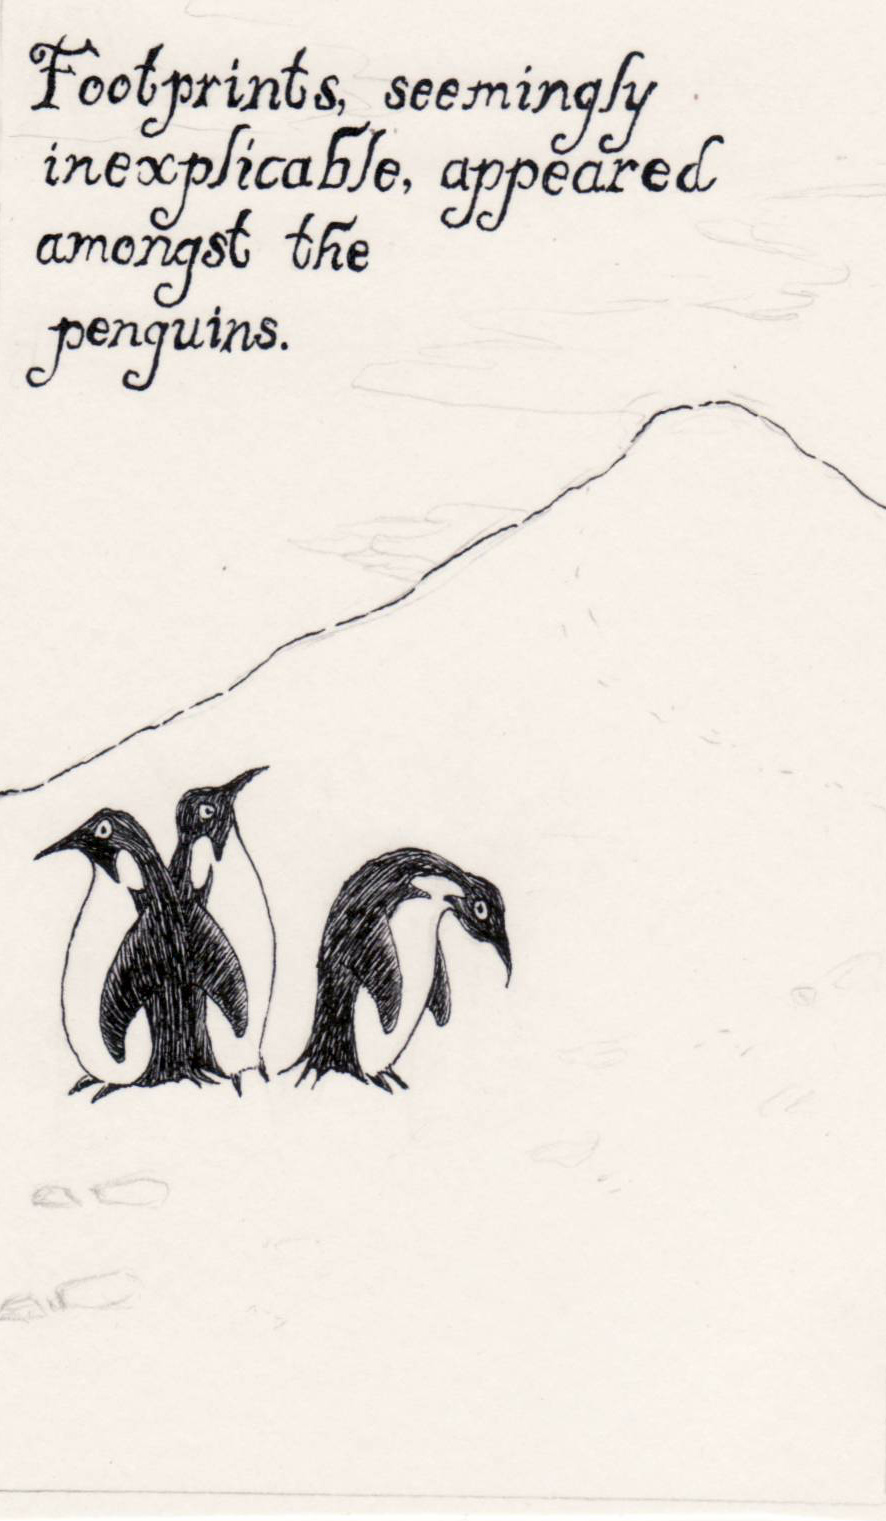 [penguin-footprints.JPG]